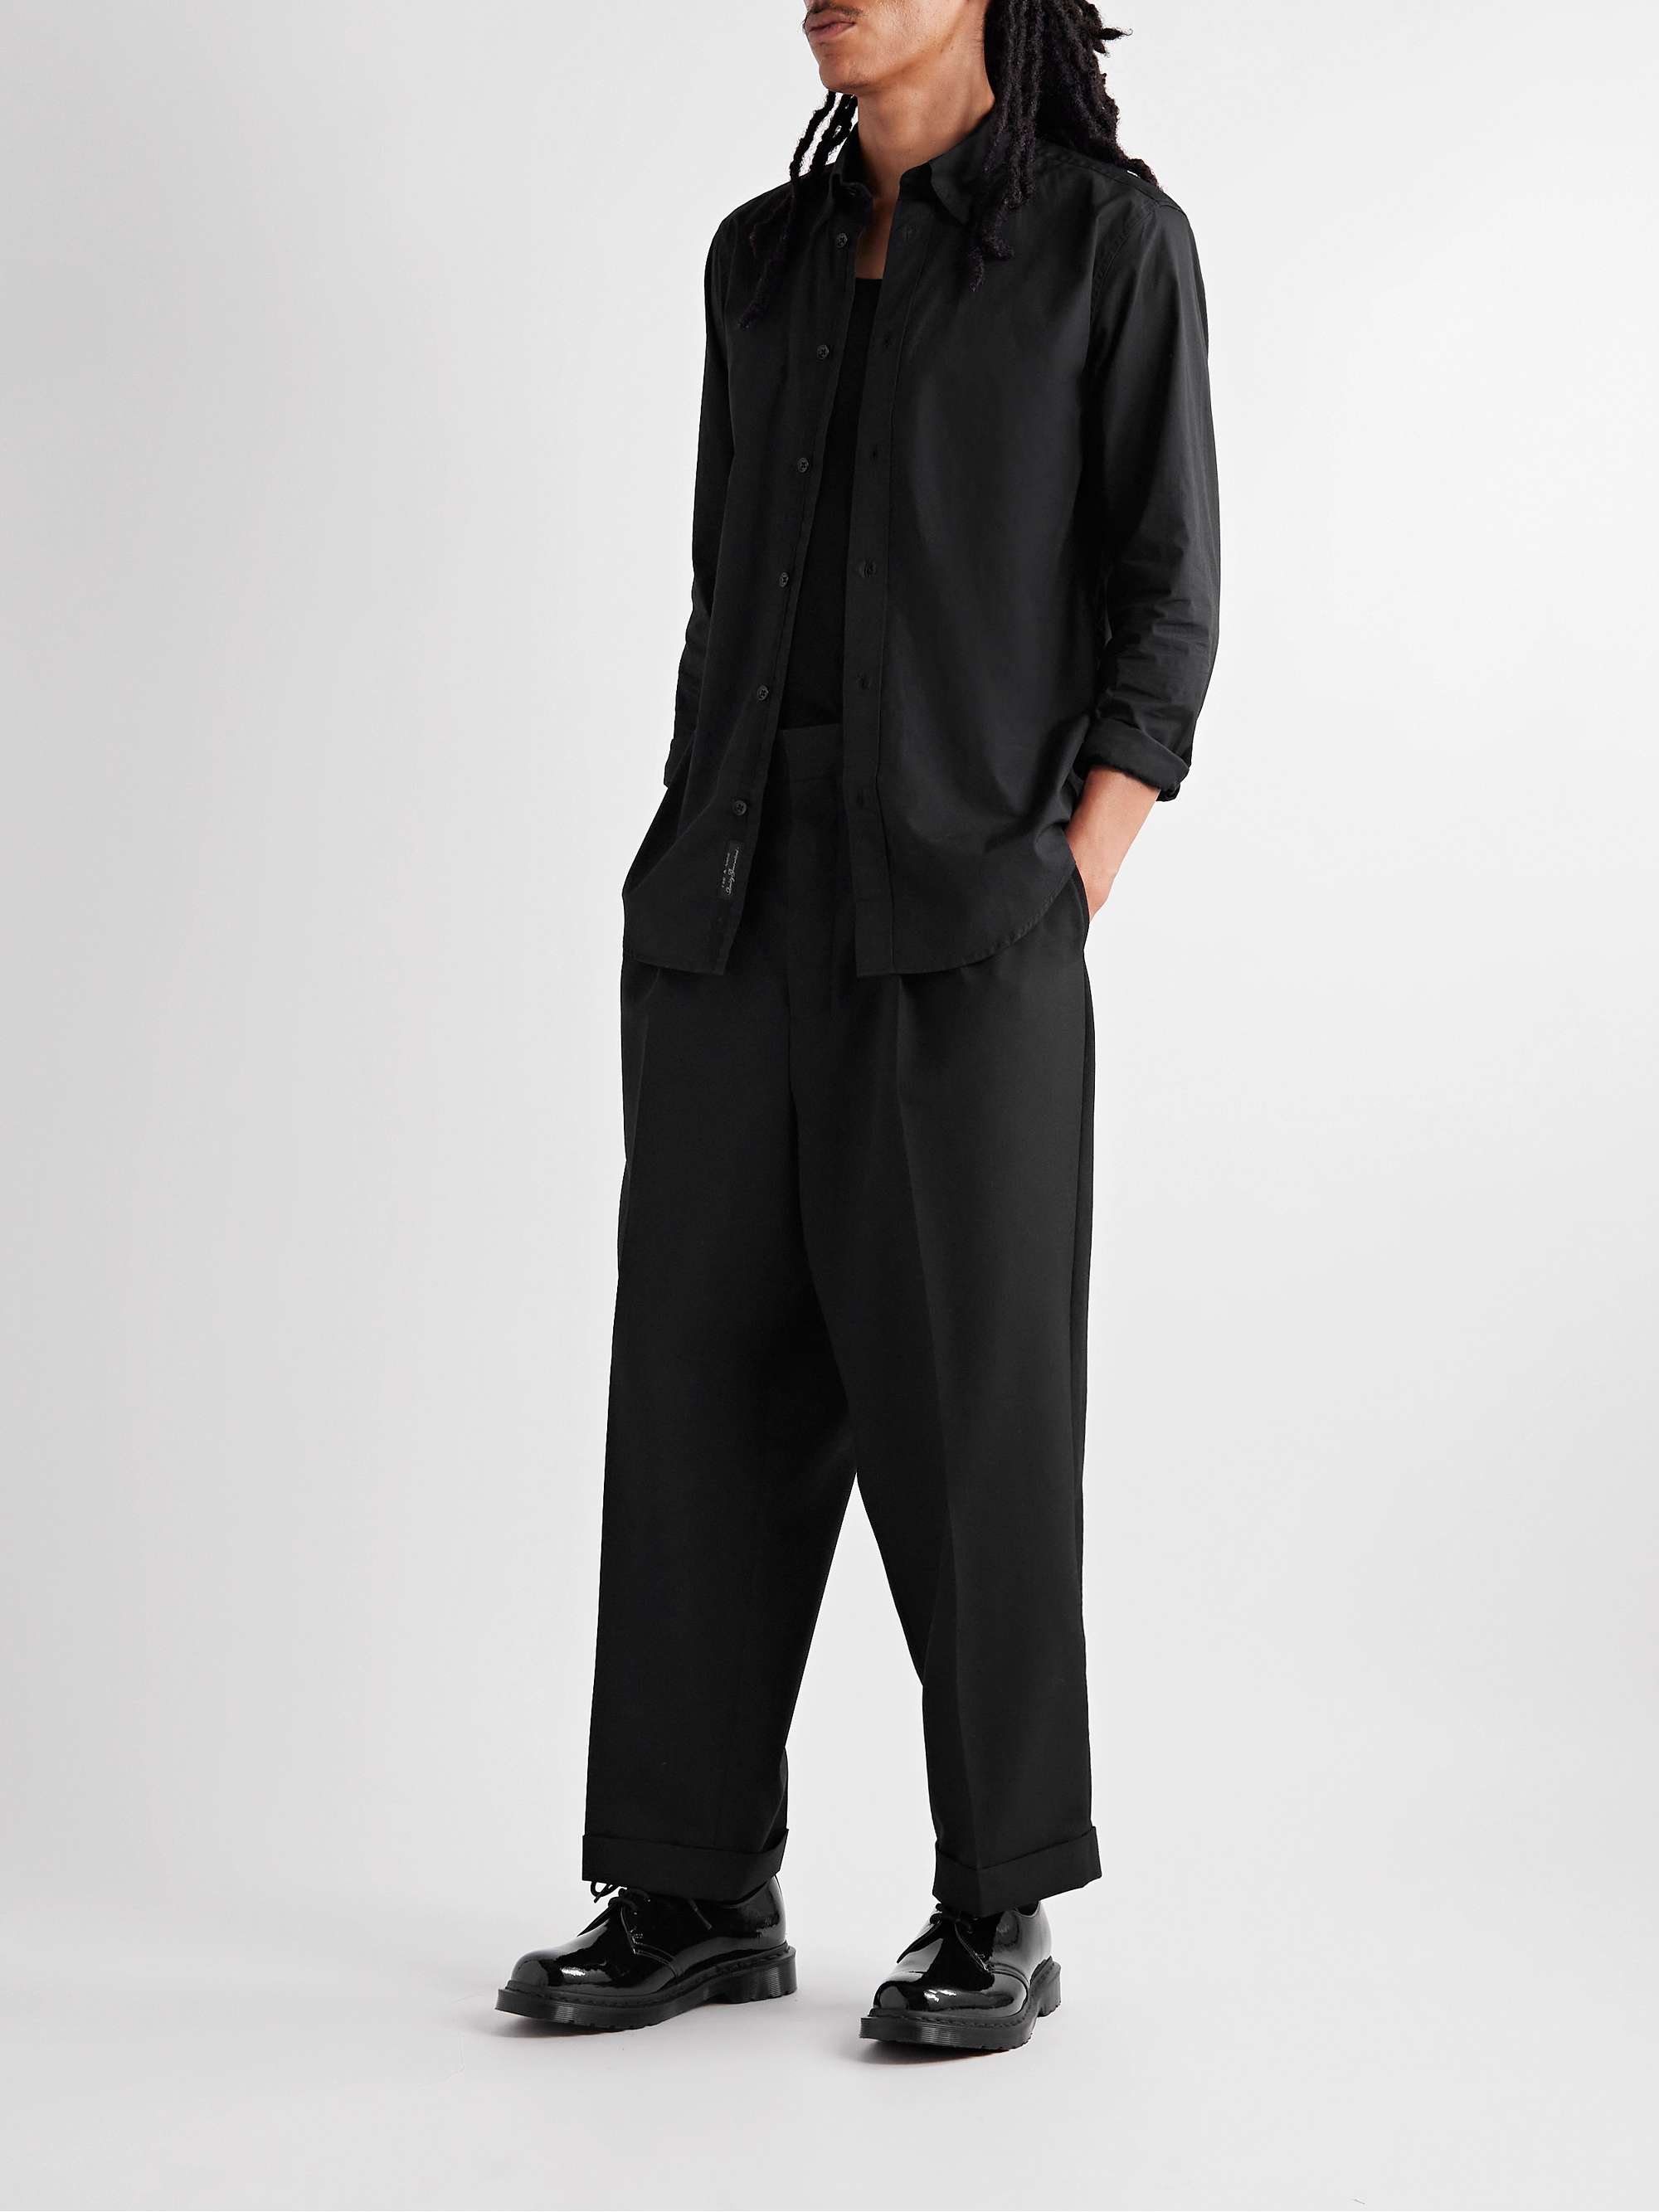 RAG & BONE ICONS Zac 365 Slim-Fit Cotton-Poplin Shirt for Men | MR PORTER